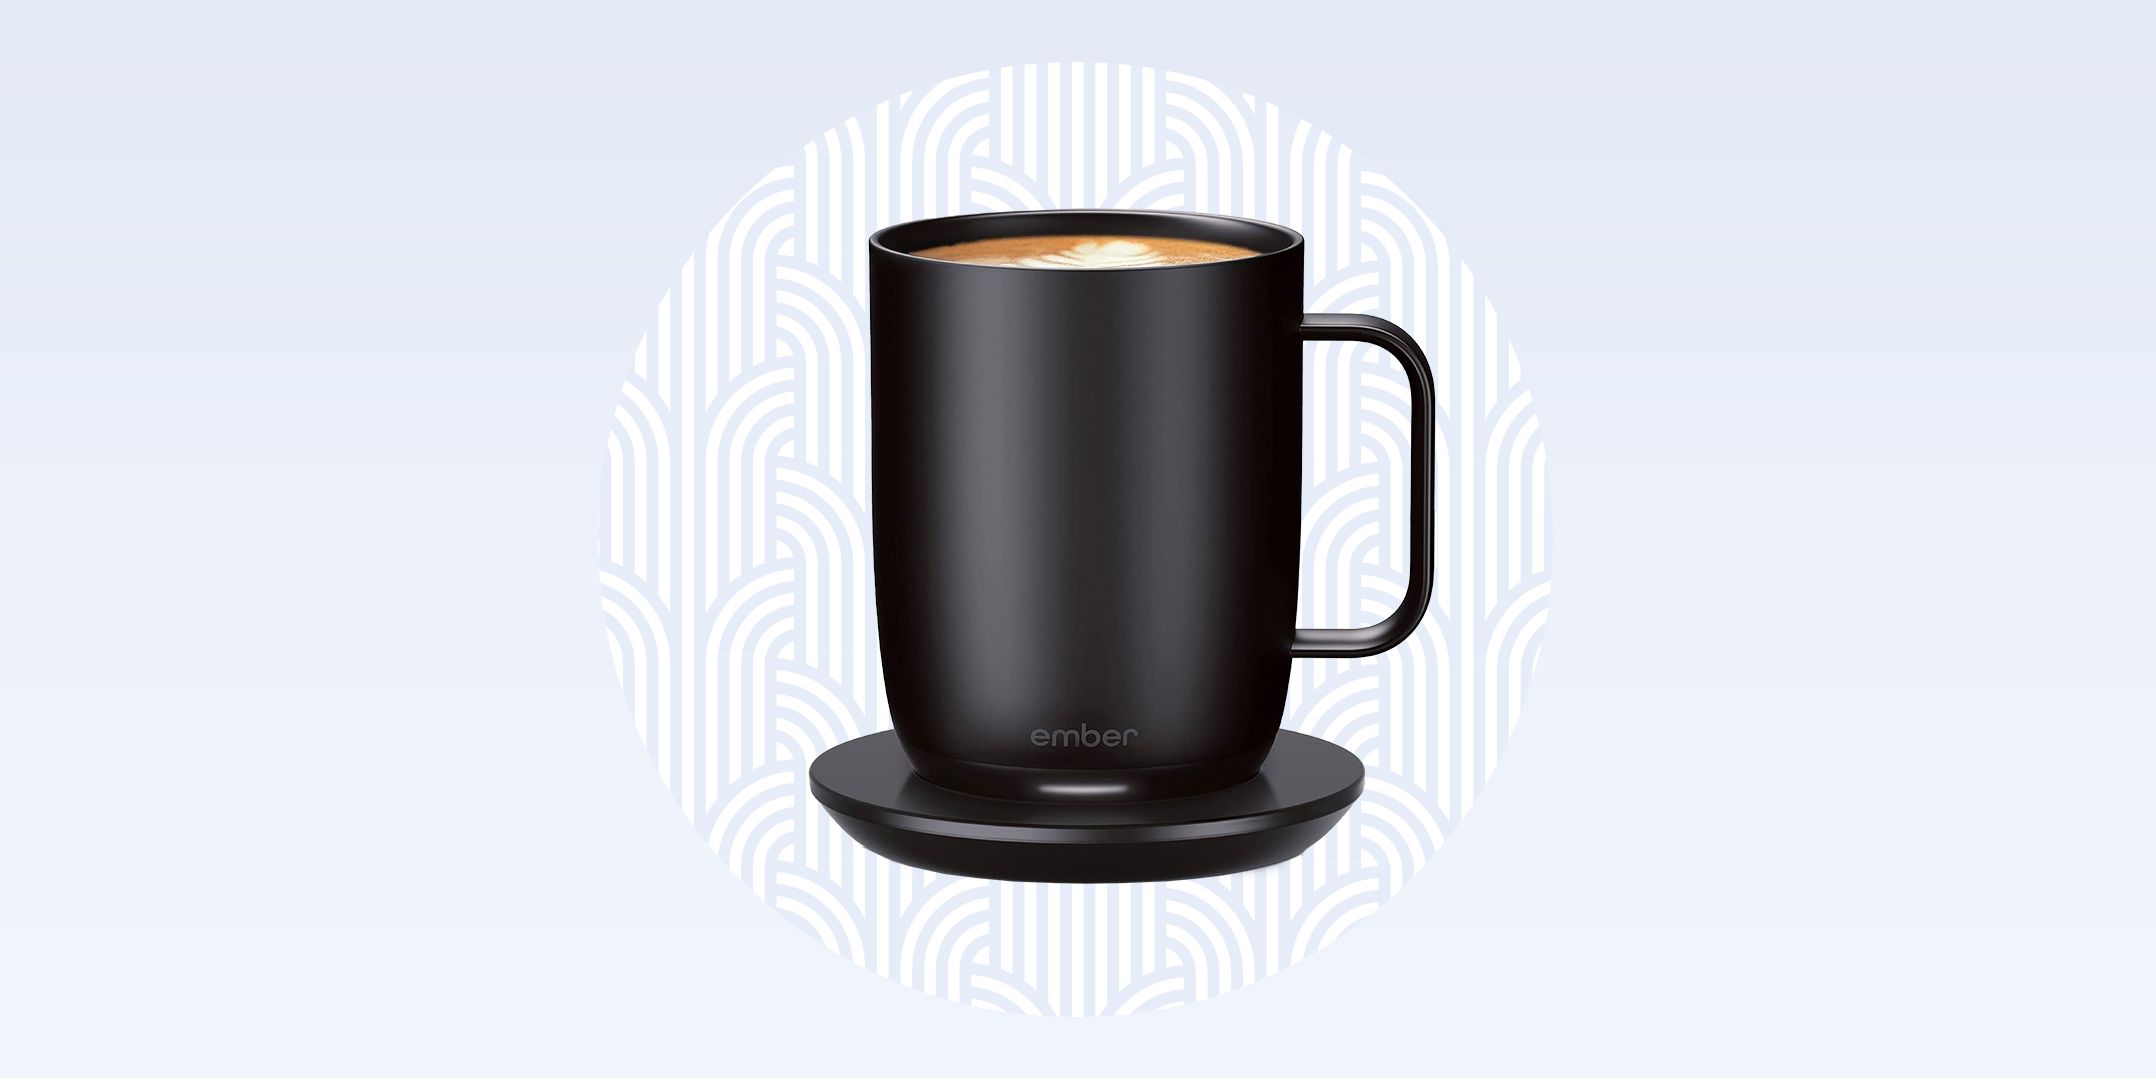 Ember Temperature Control Smart Mug 2, 14 Oz, App Controlled Heated Coffee  Mug Review 